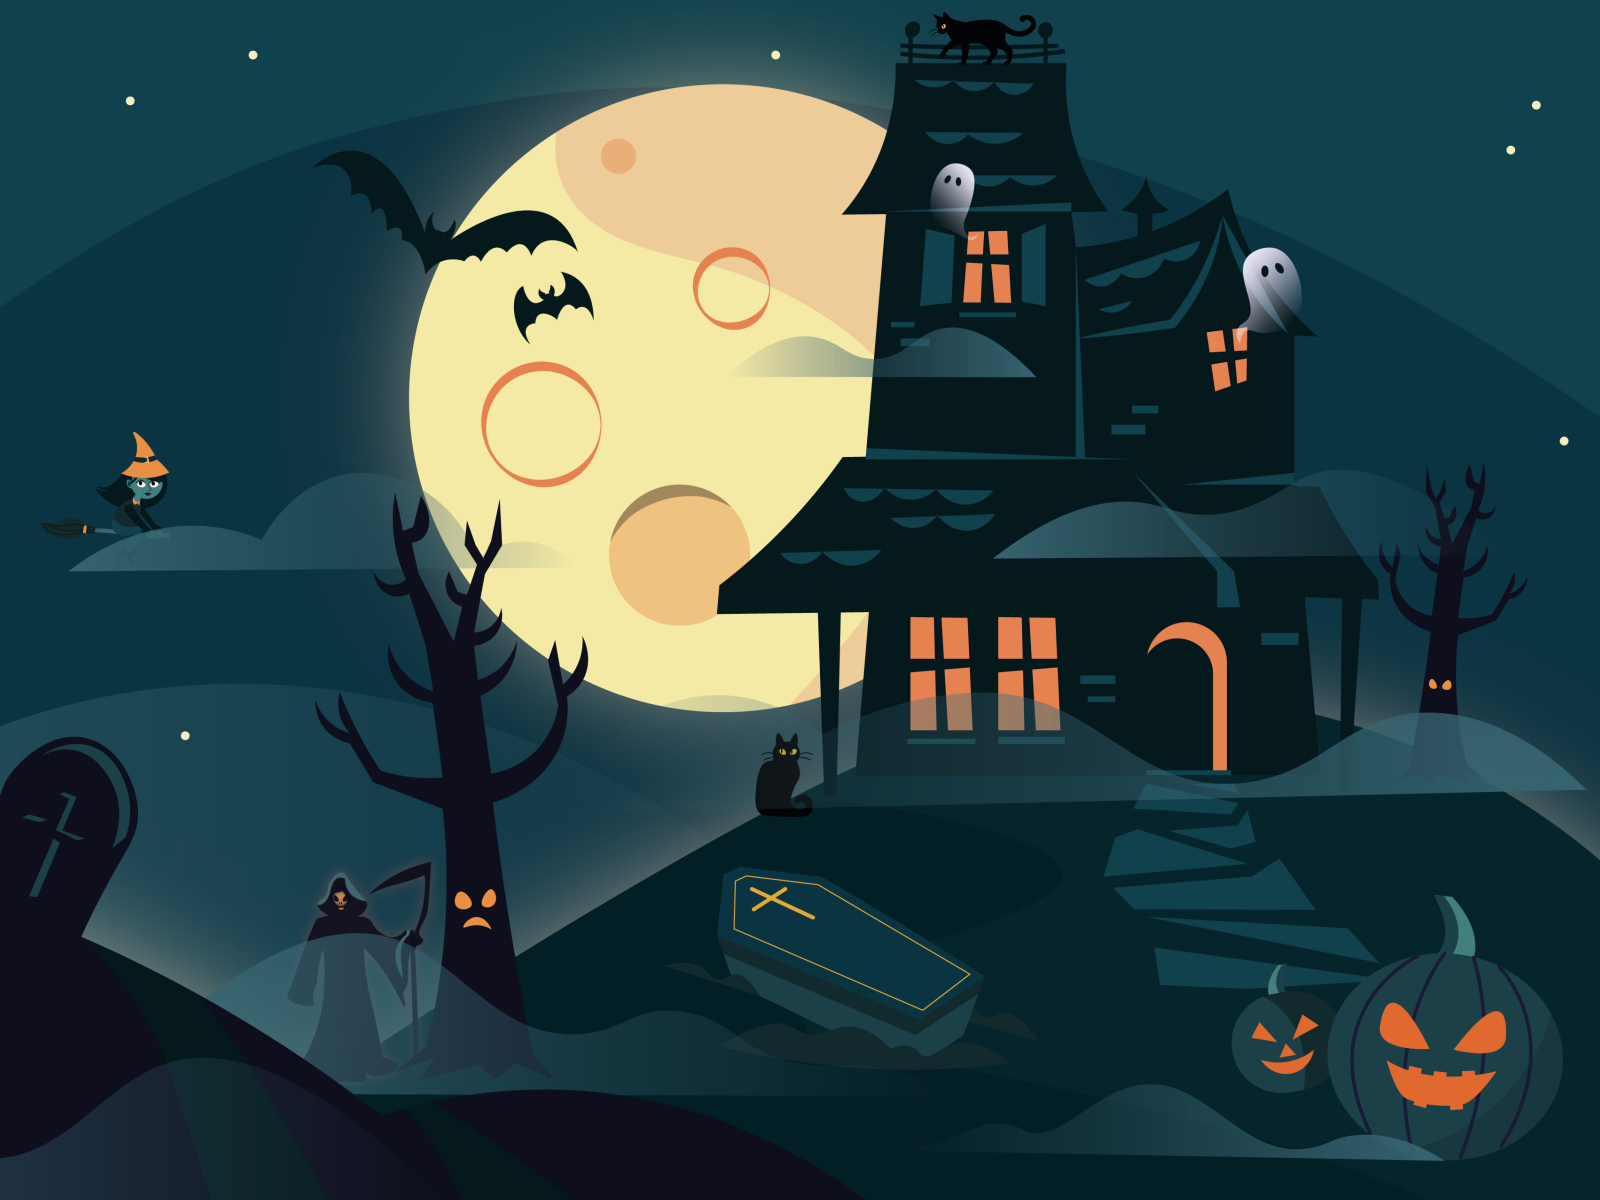 Haunted Graveyard kids illustration illustratie hauntings halloween weekly halloween scene illustrator pumpkin witch haunted house moon graveyard haunted halloween